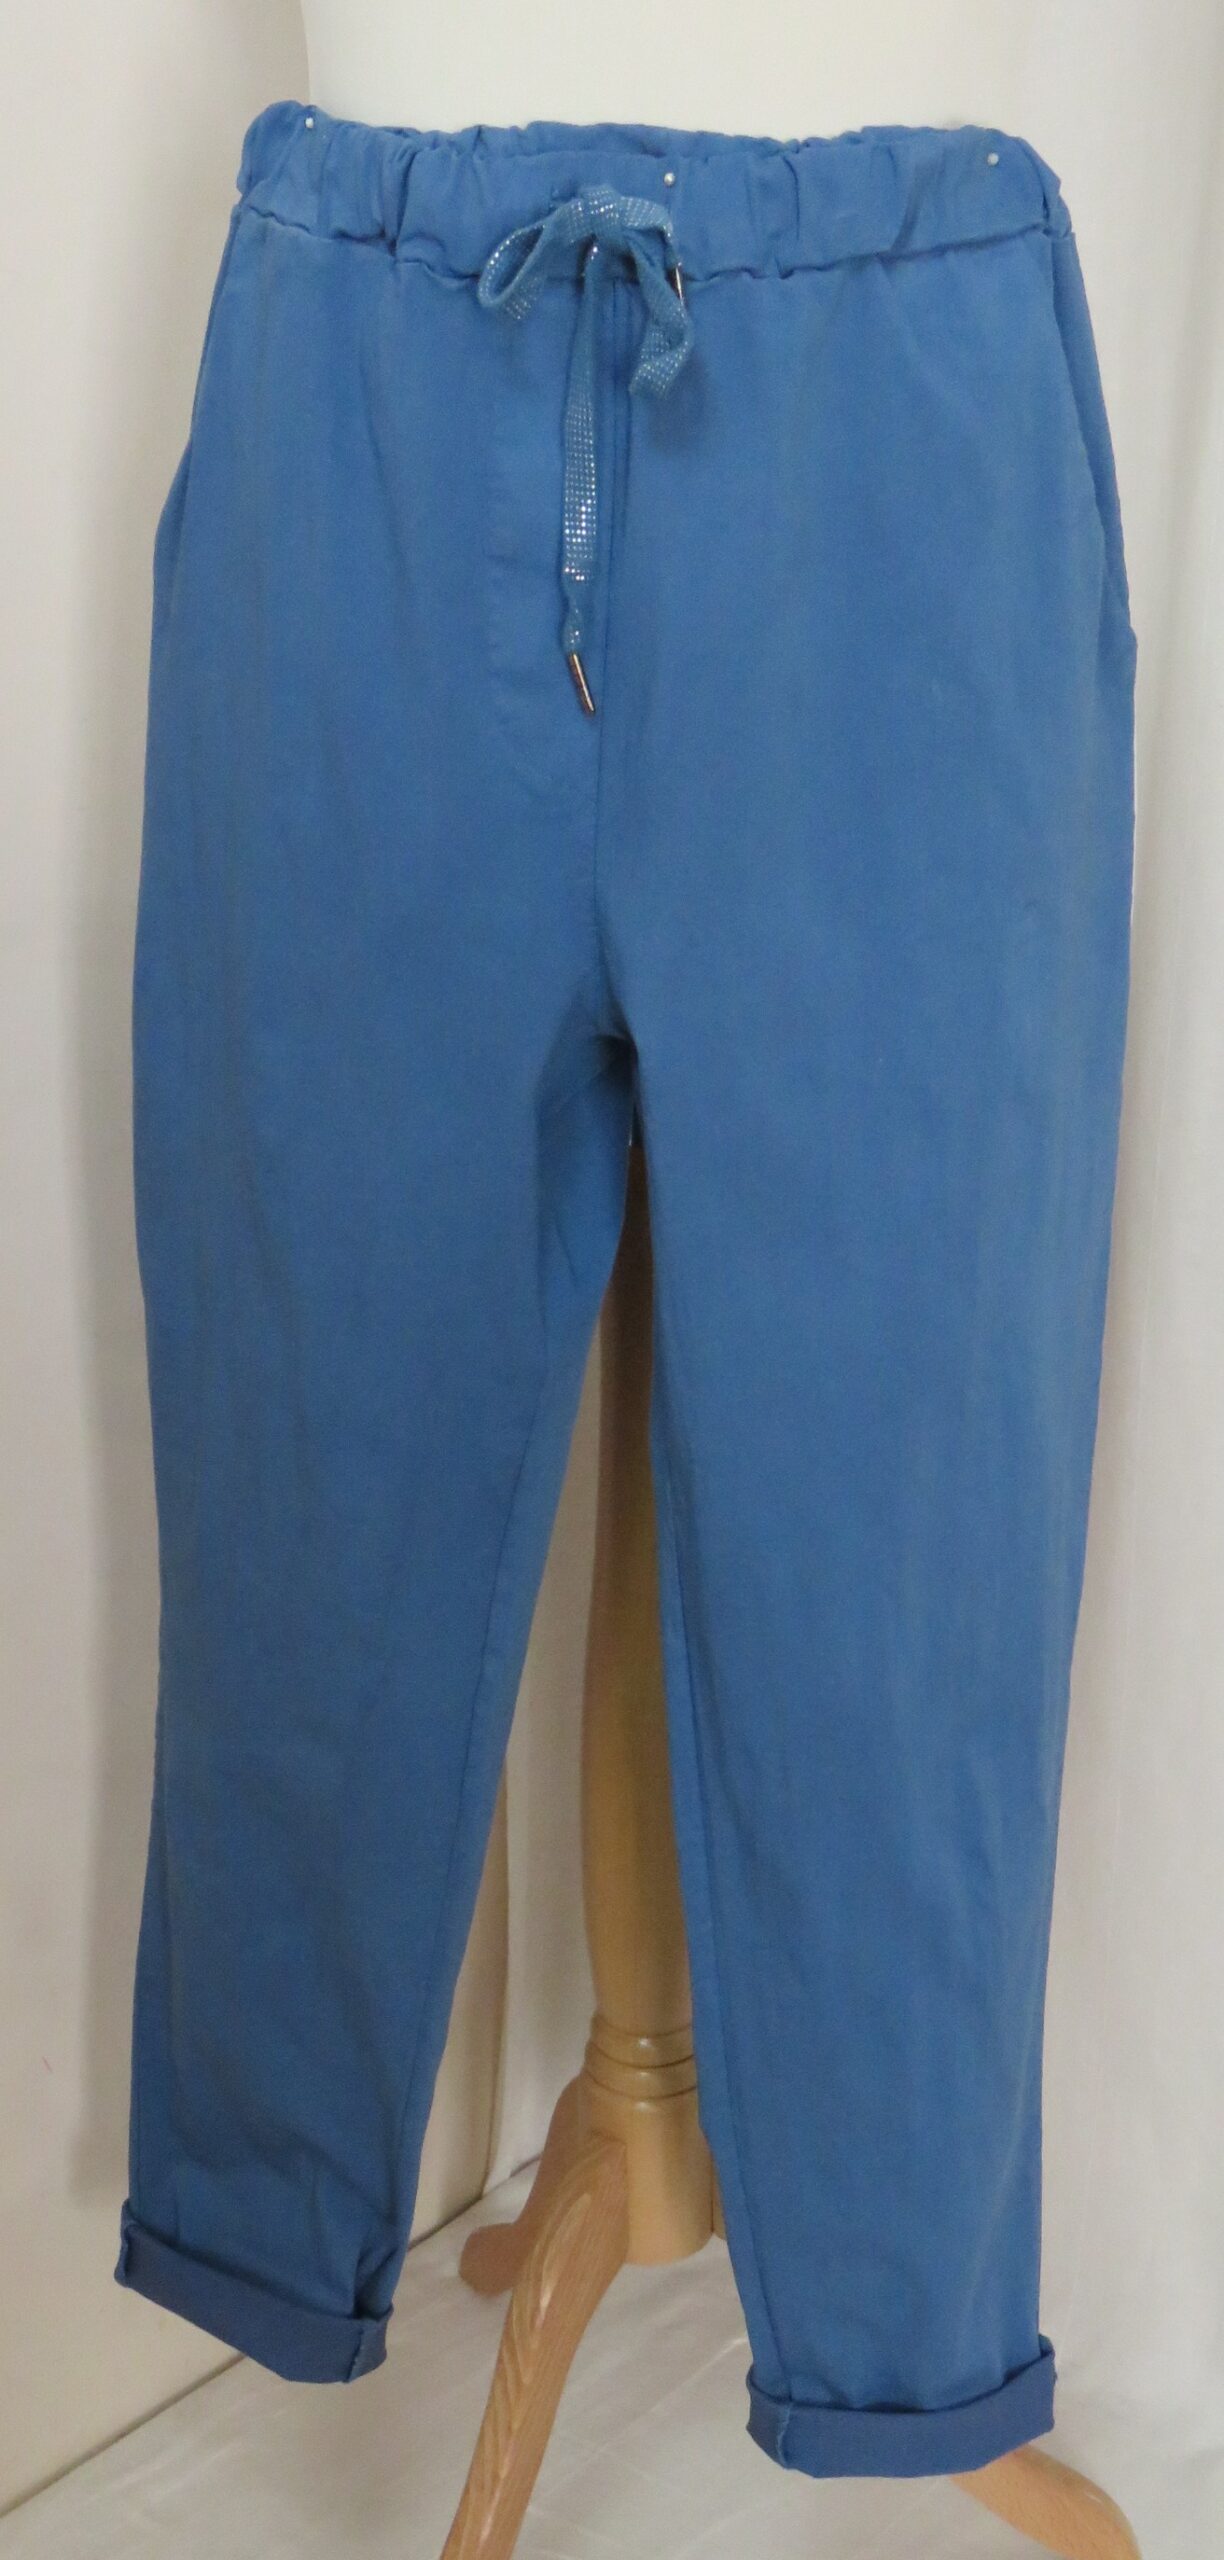 Cornflower blue, stretchy, Magic pants